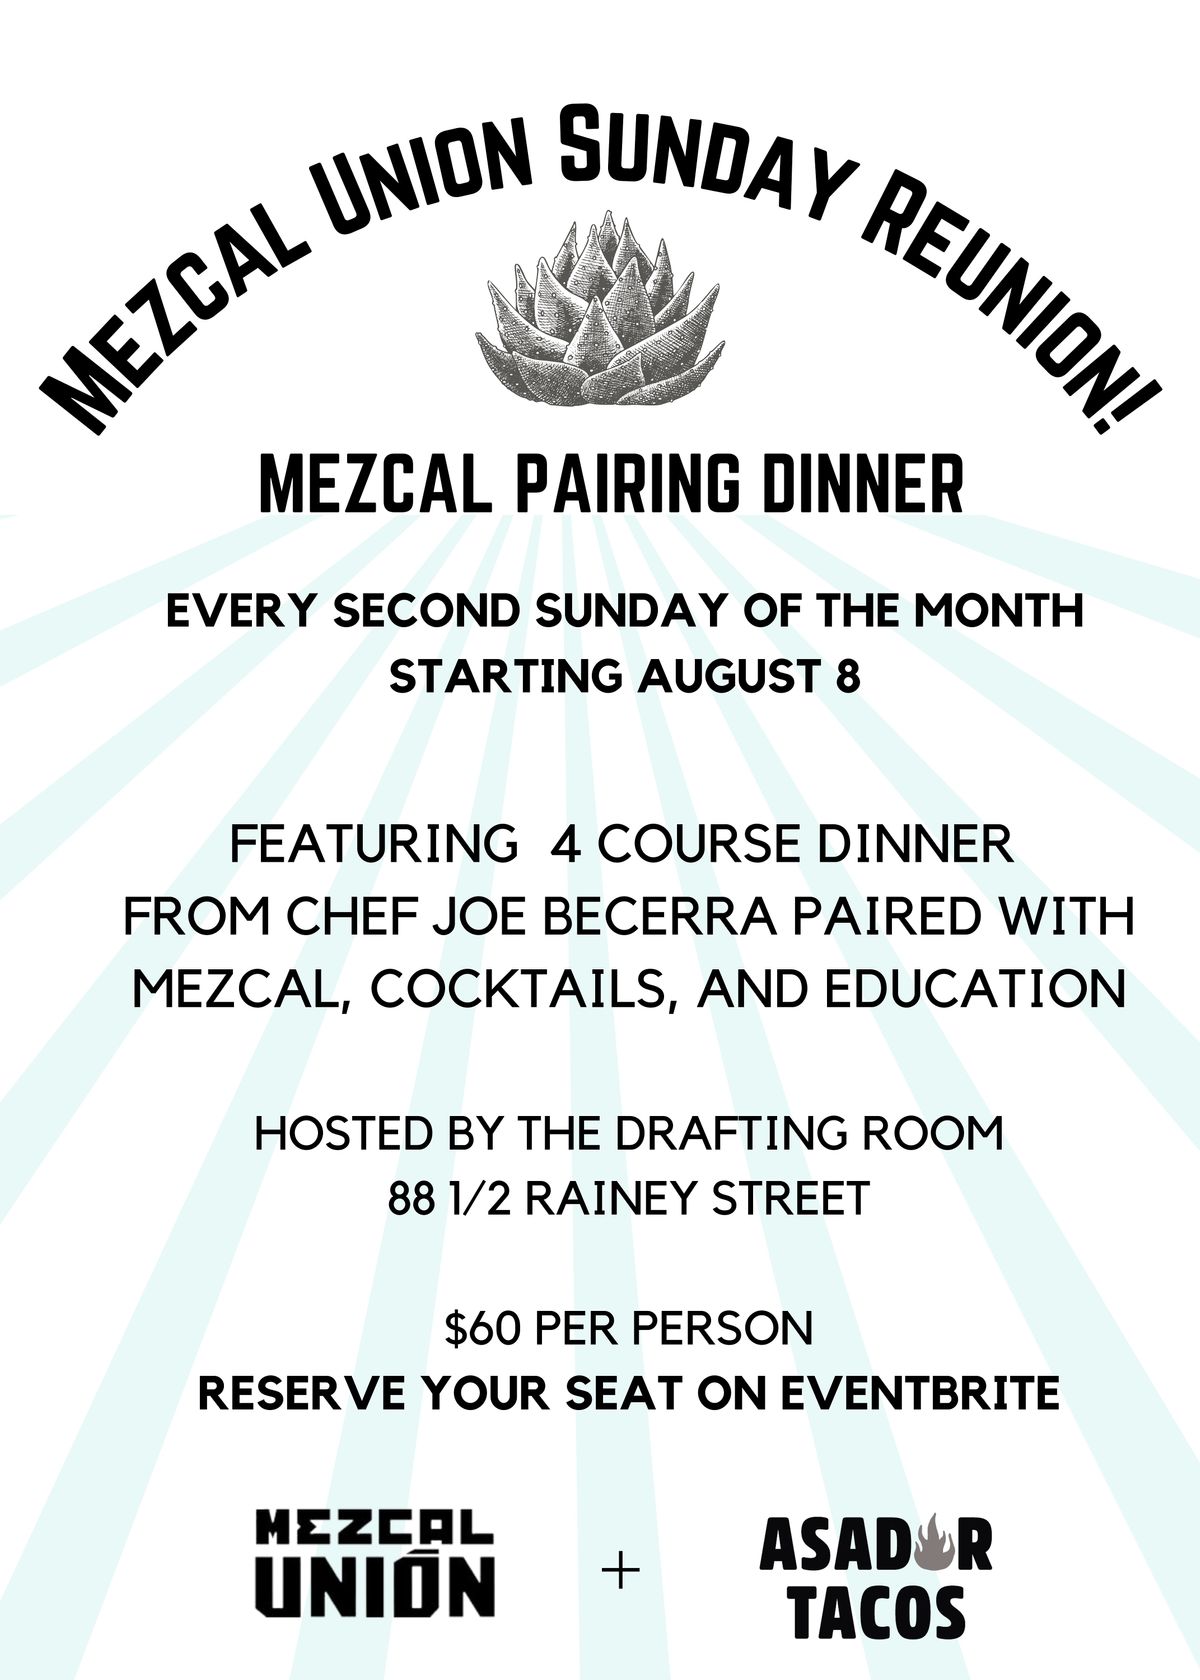 Mezcal Union Sunday Reunion